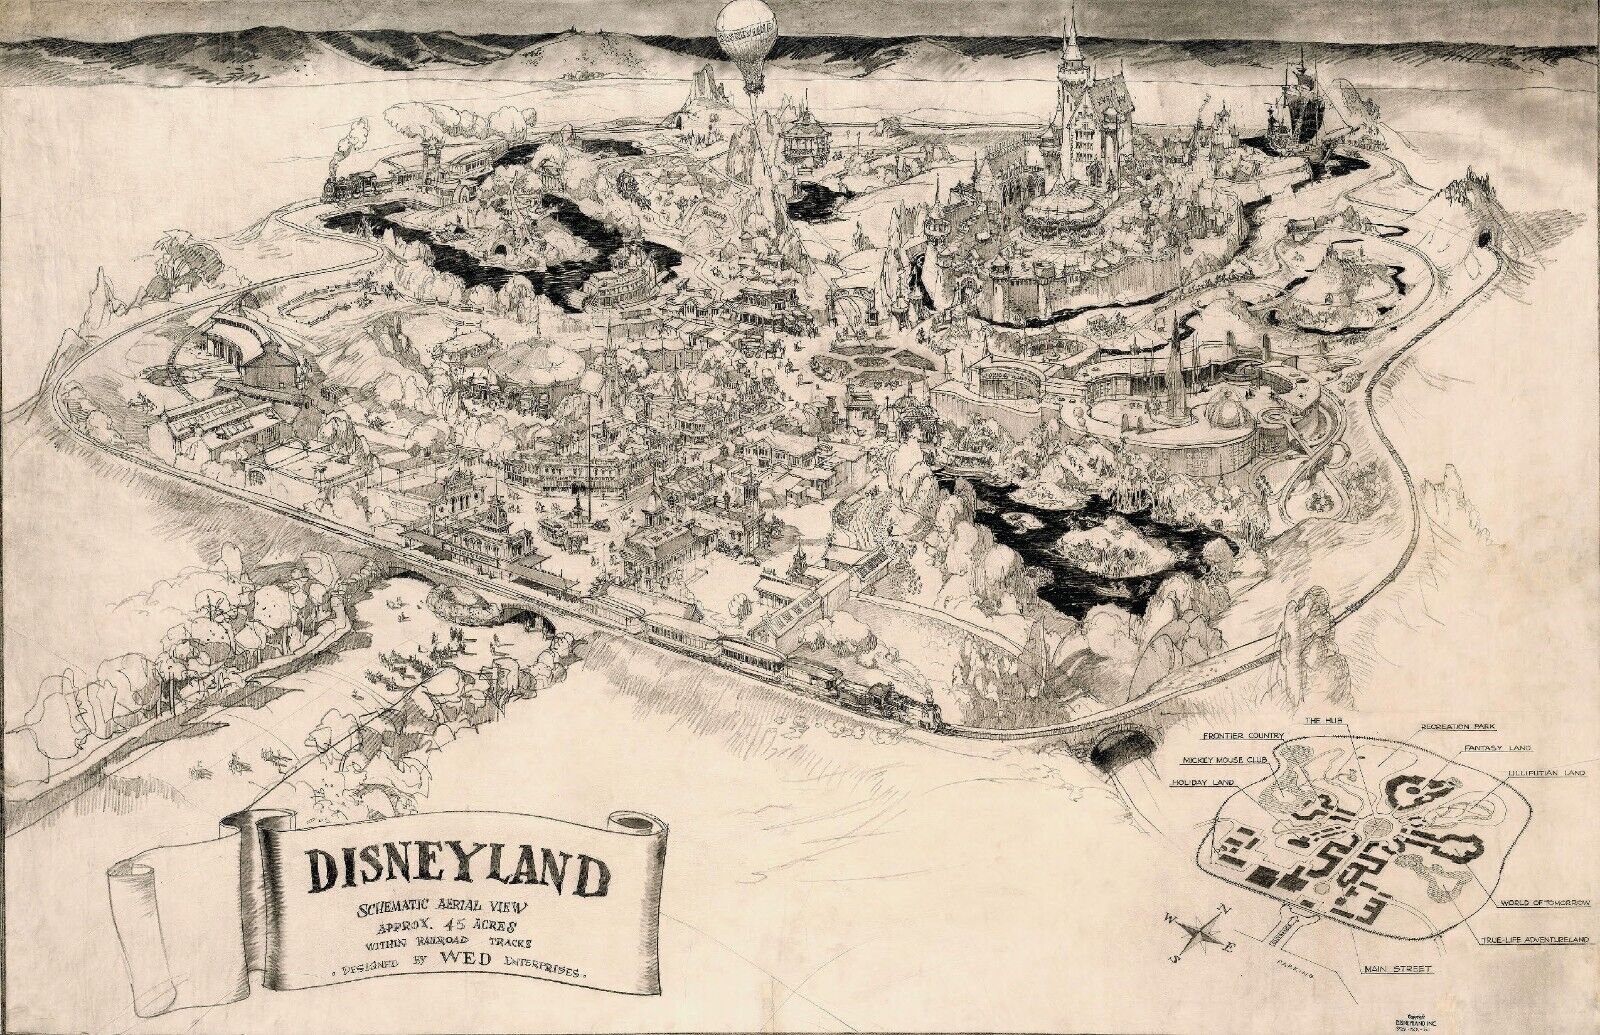 Disneyland Park Schematic Drawing Sketch Map 1955 Poster Print